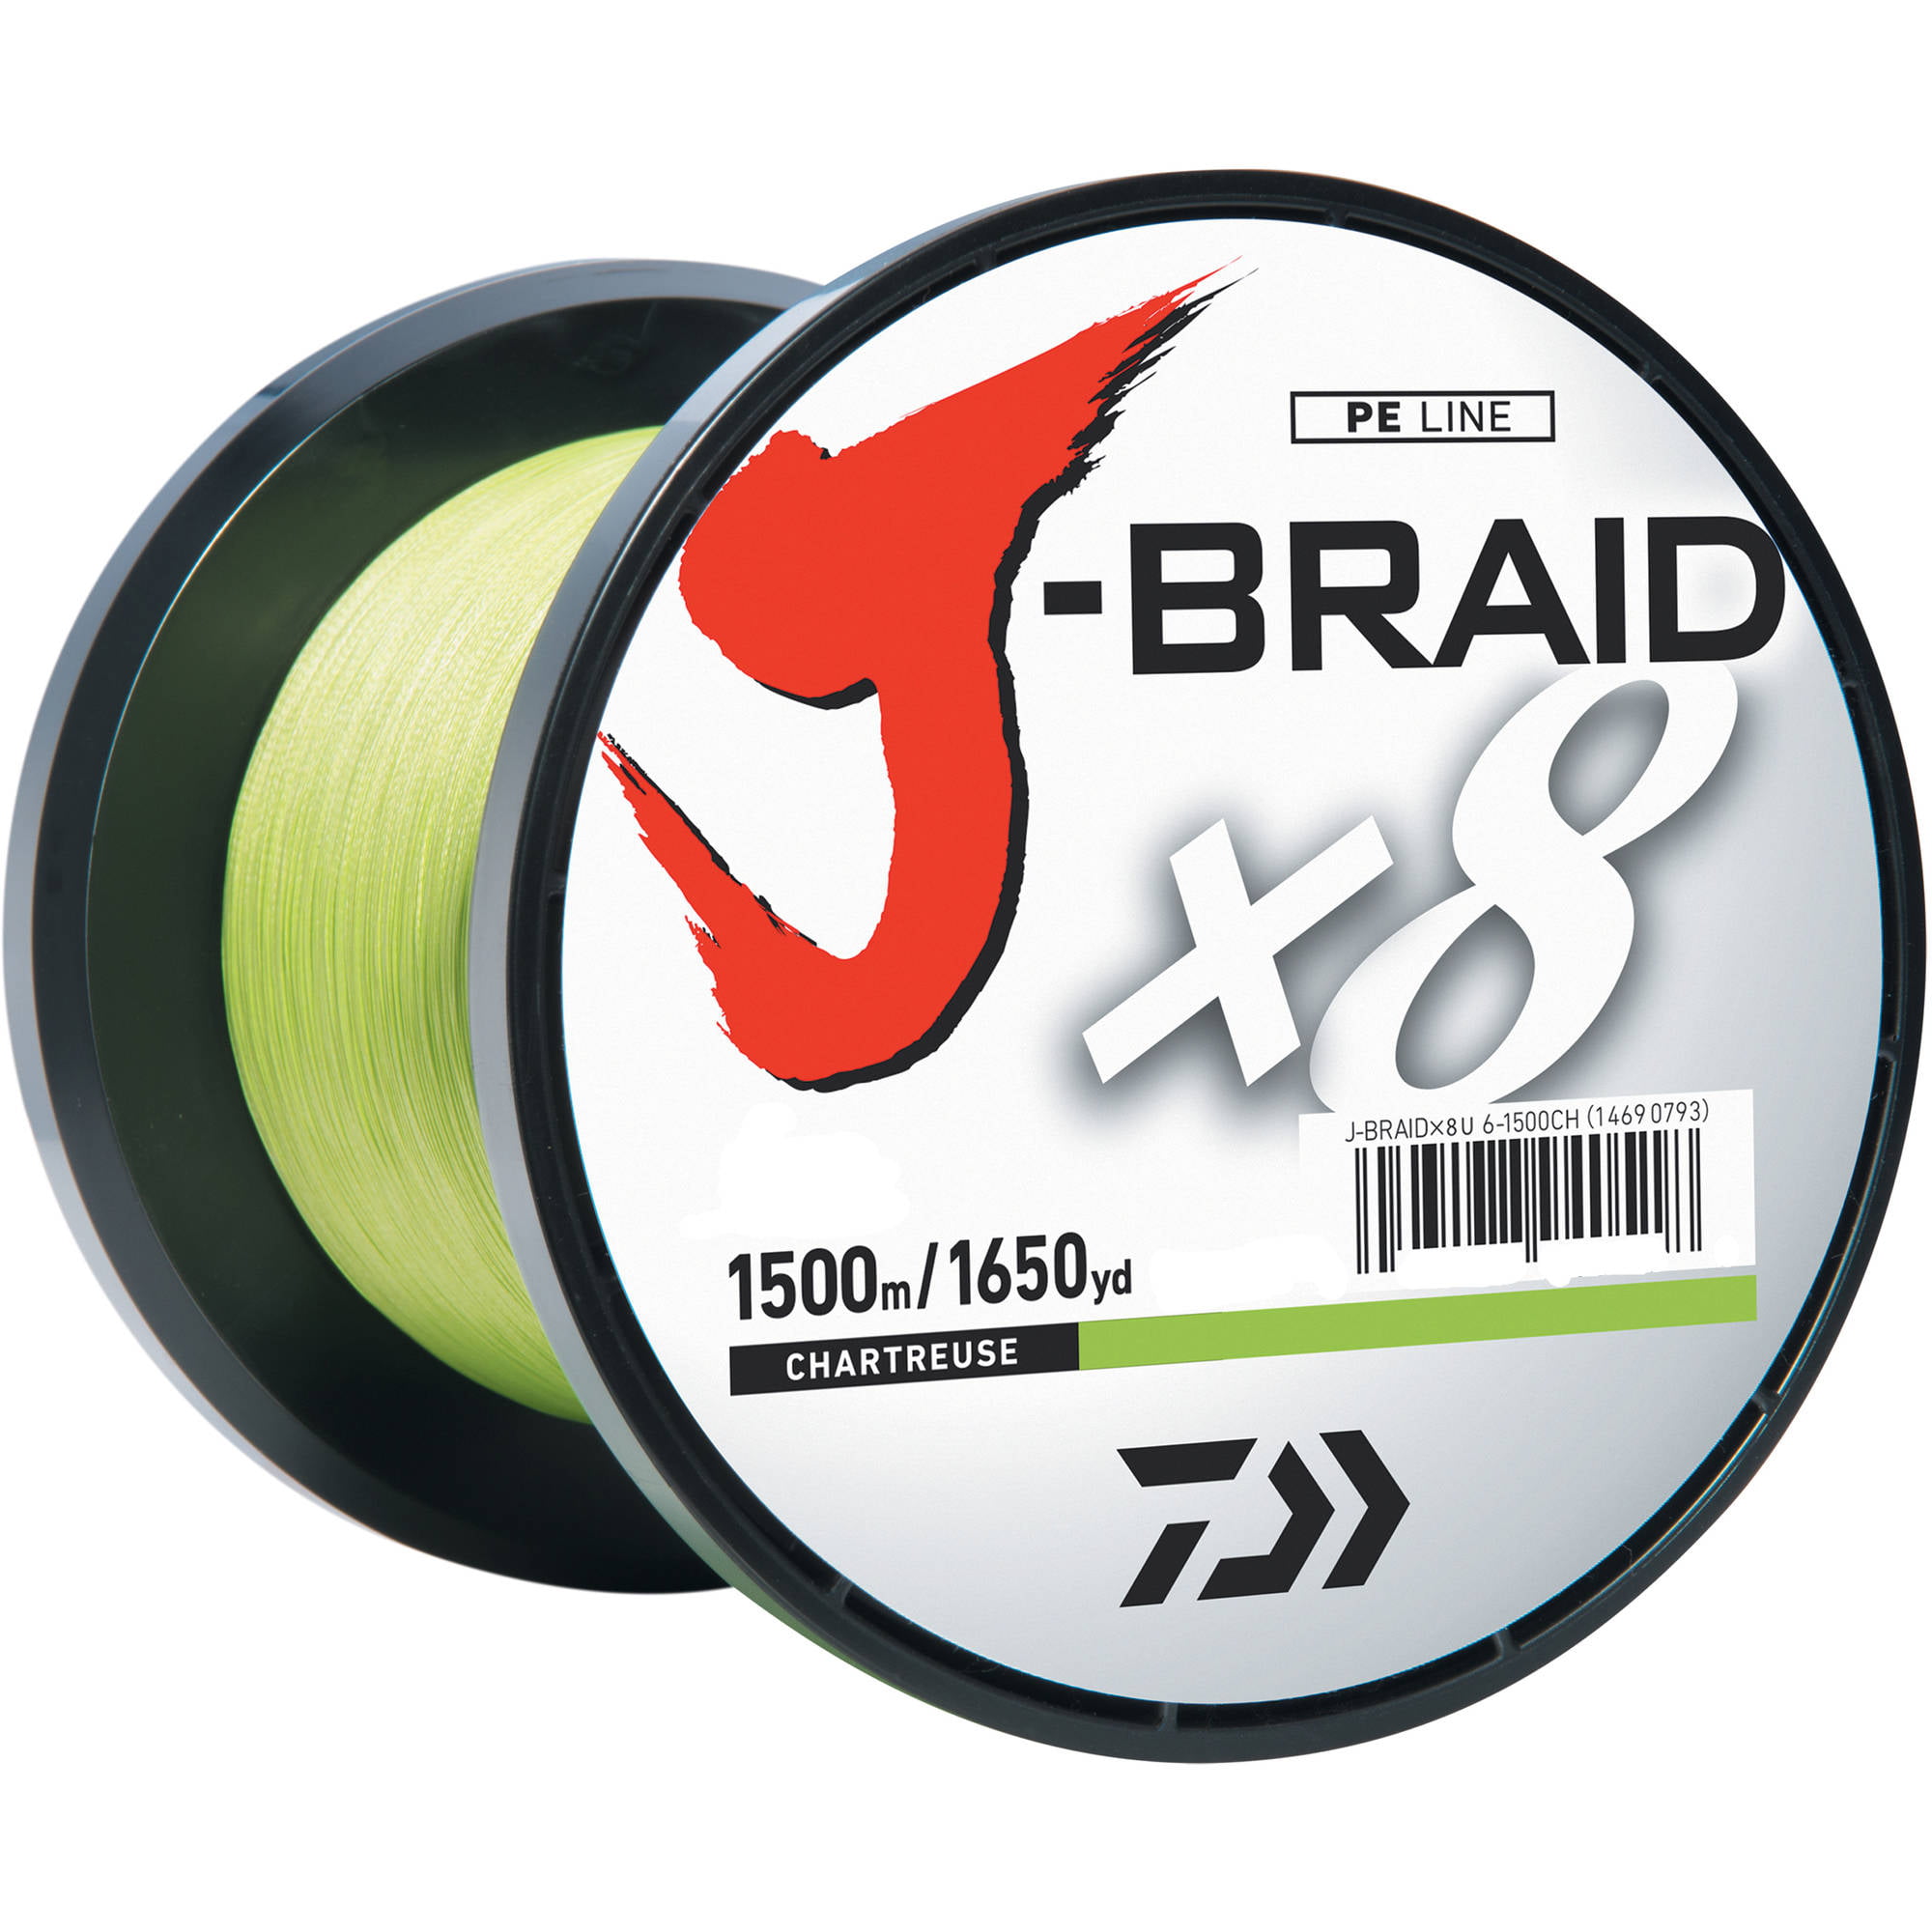 Chartreuse Daiwa J-Braid X8 150m PE braided line